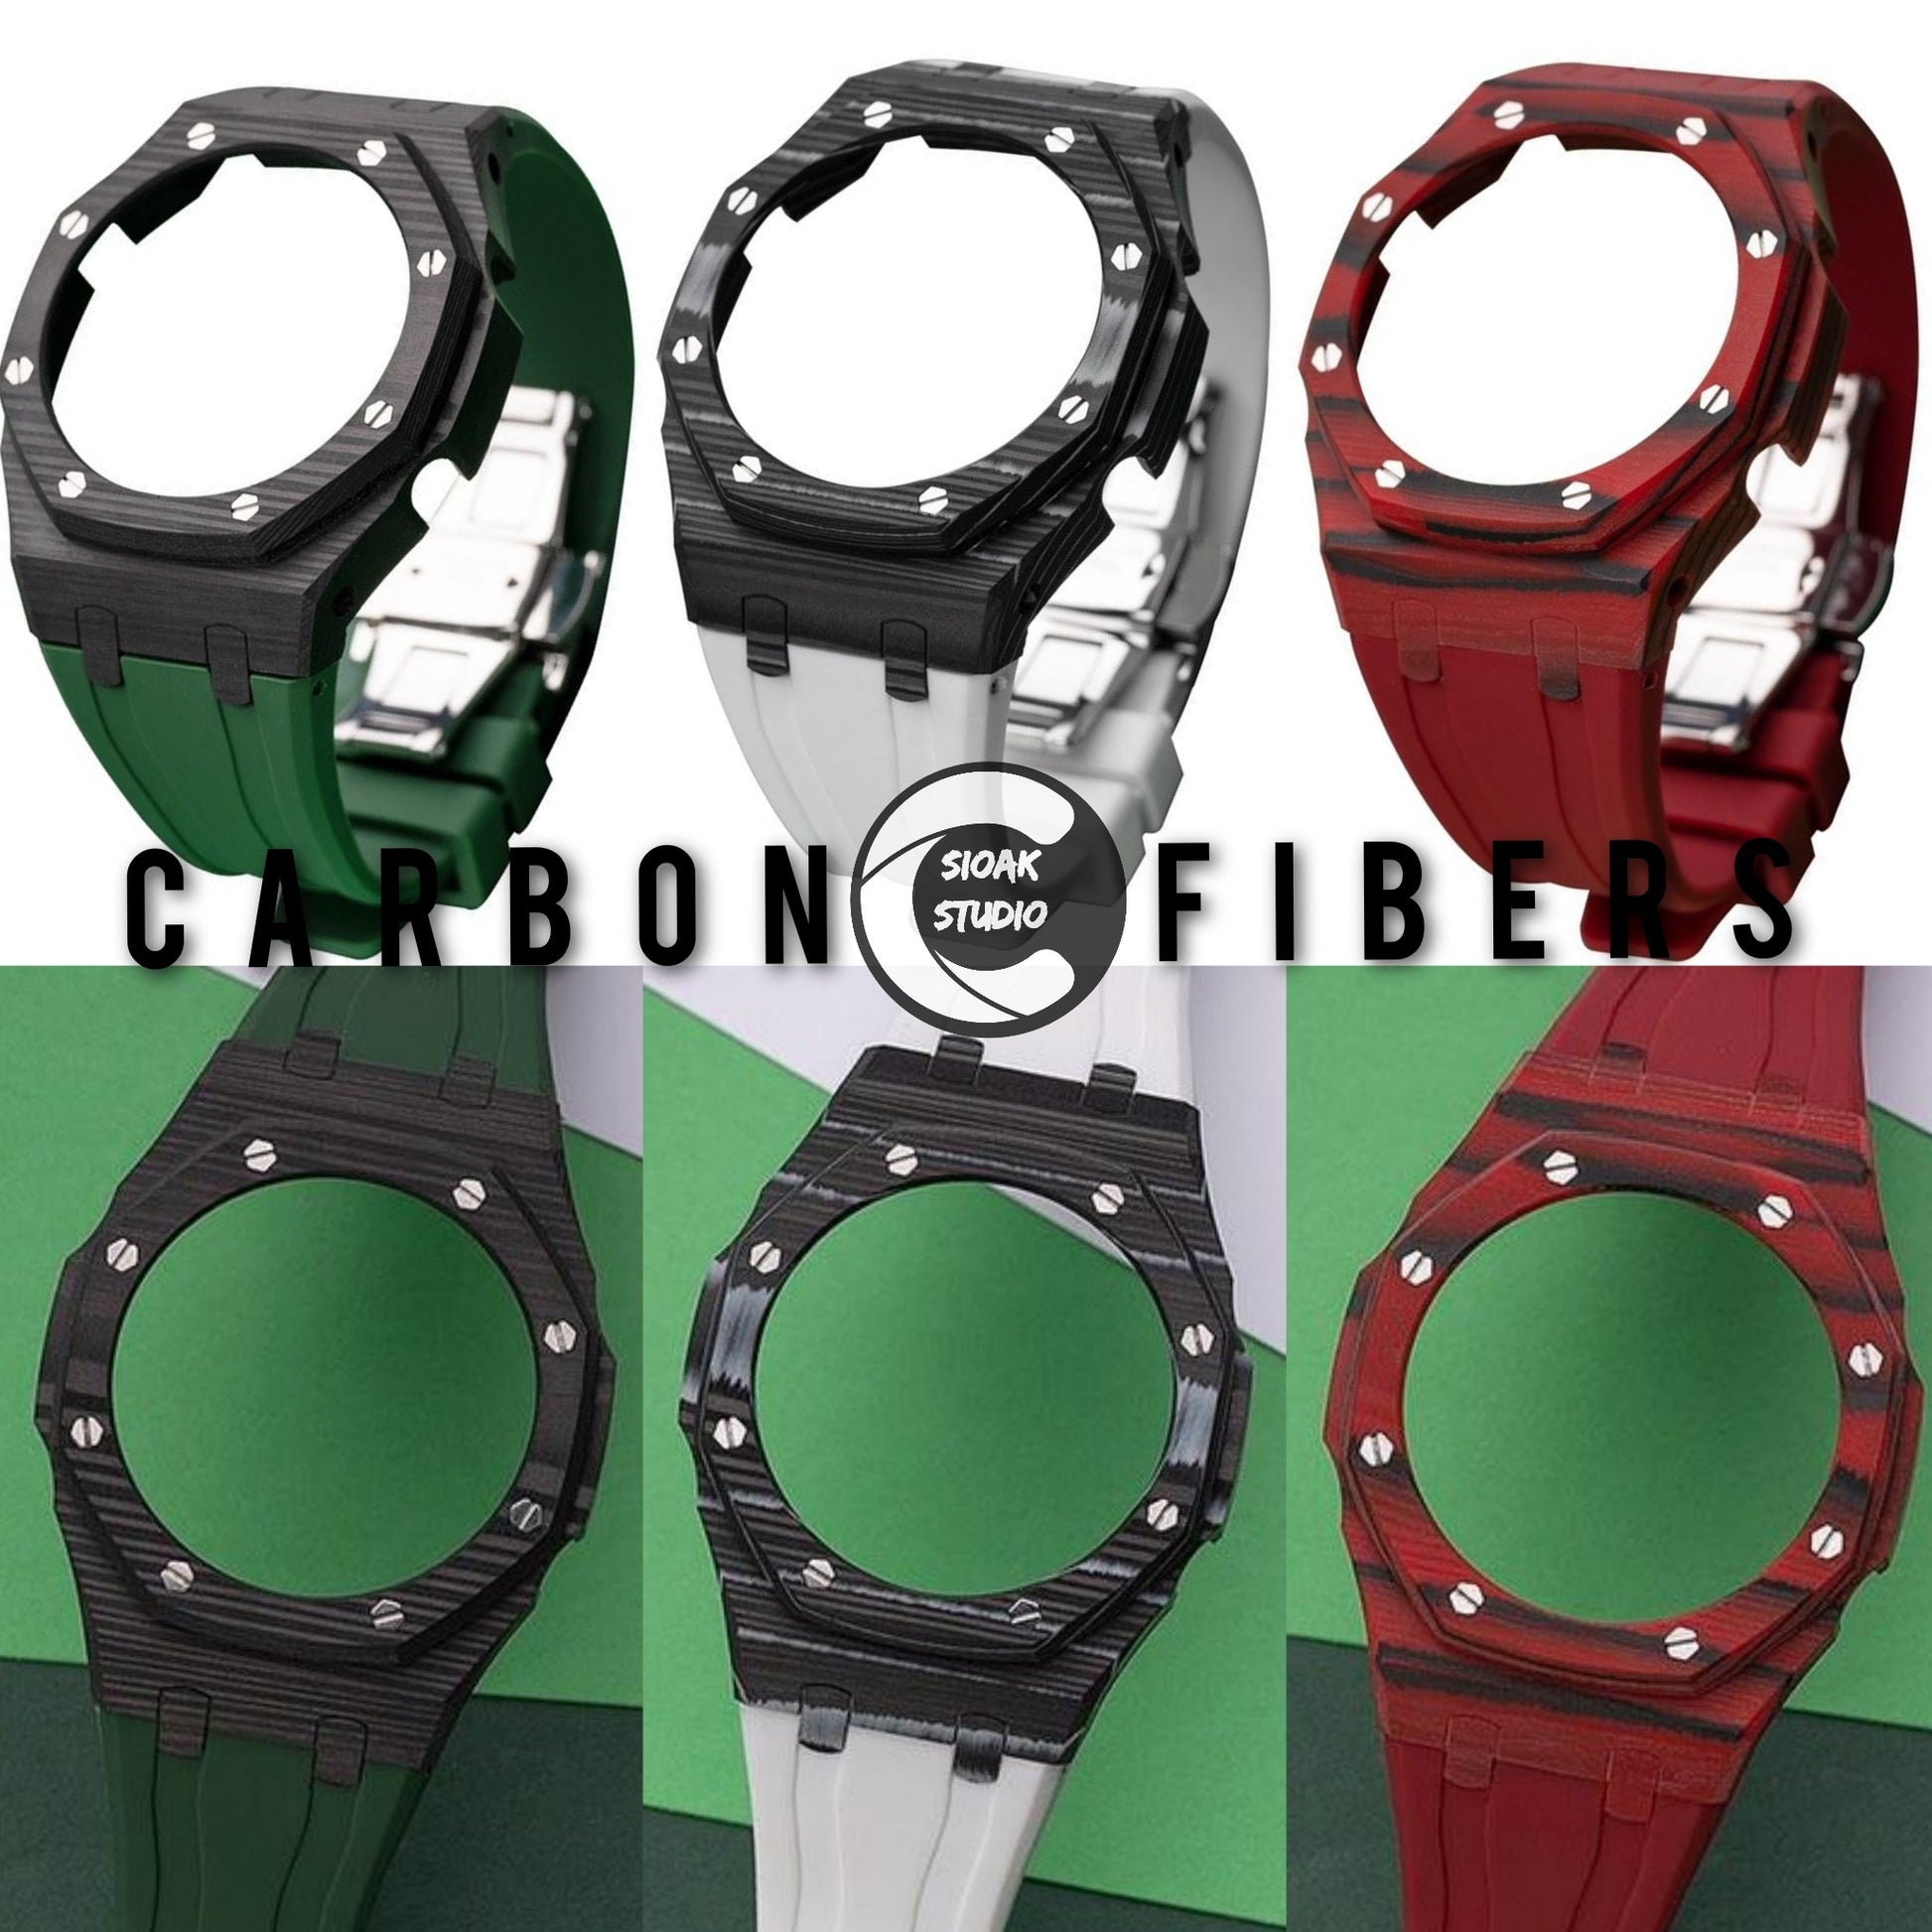 Casioak Mod Watch Carbon Fiber Black Case Black Strap Silver Time Mark Bllue Dial 44mm - Casioak Studio